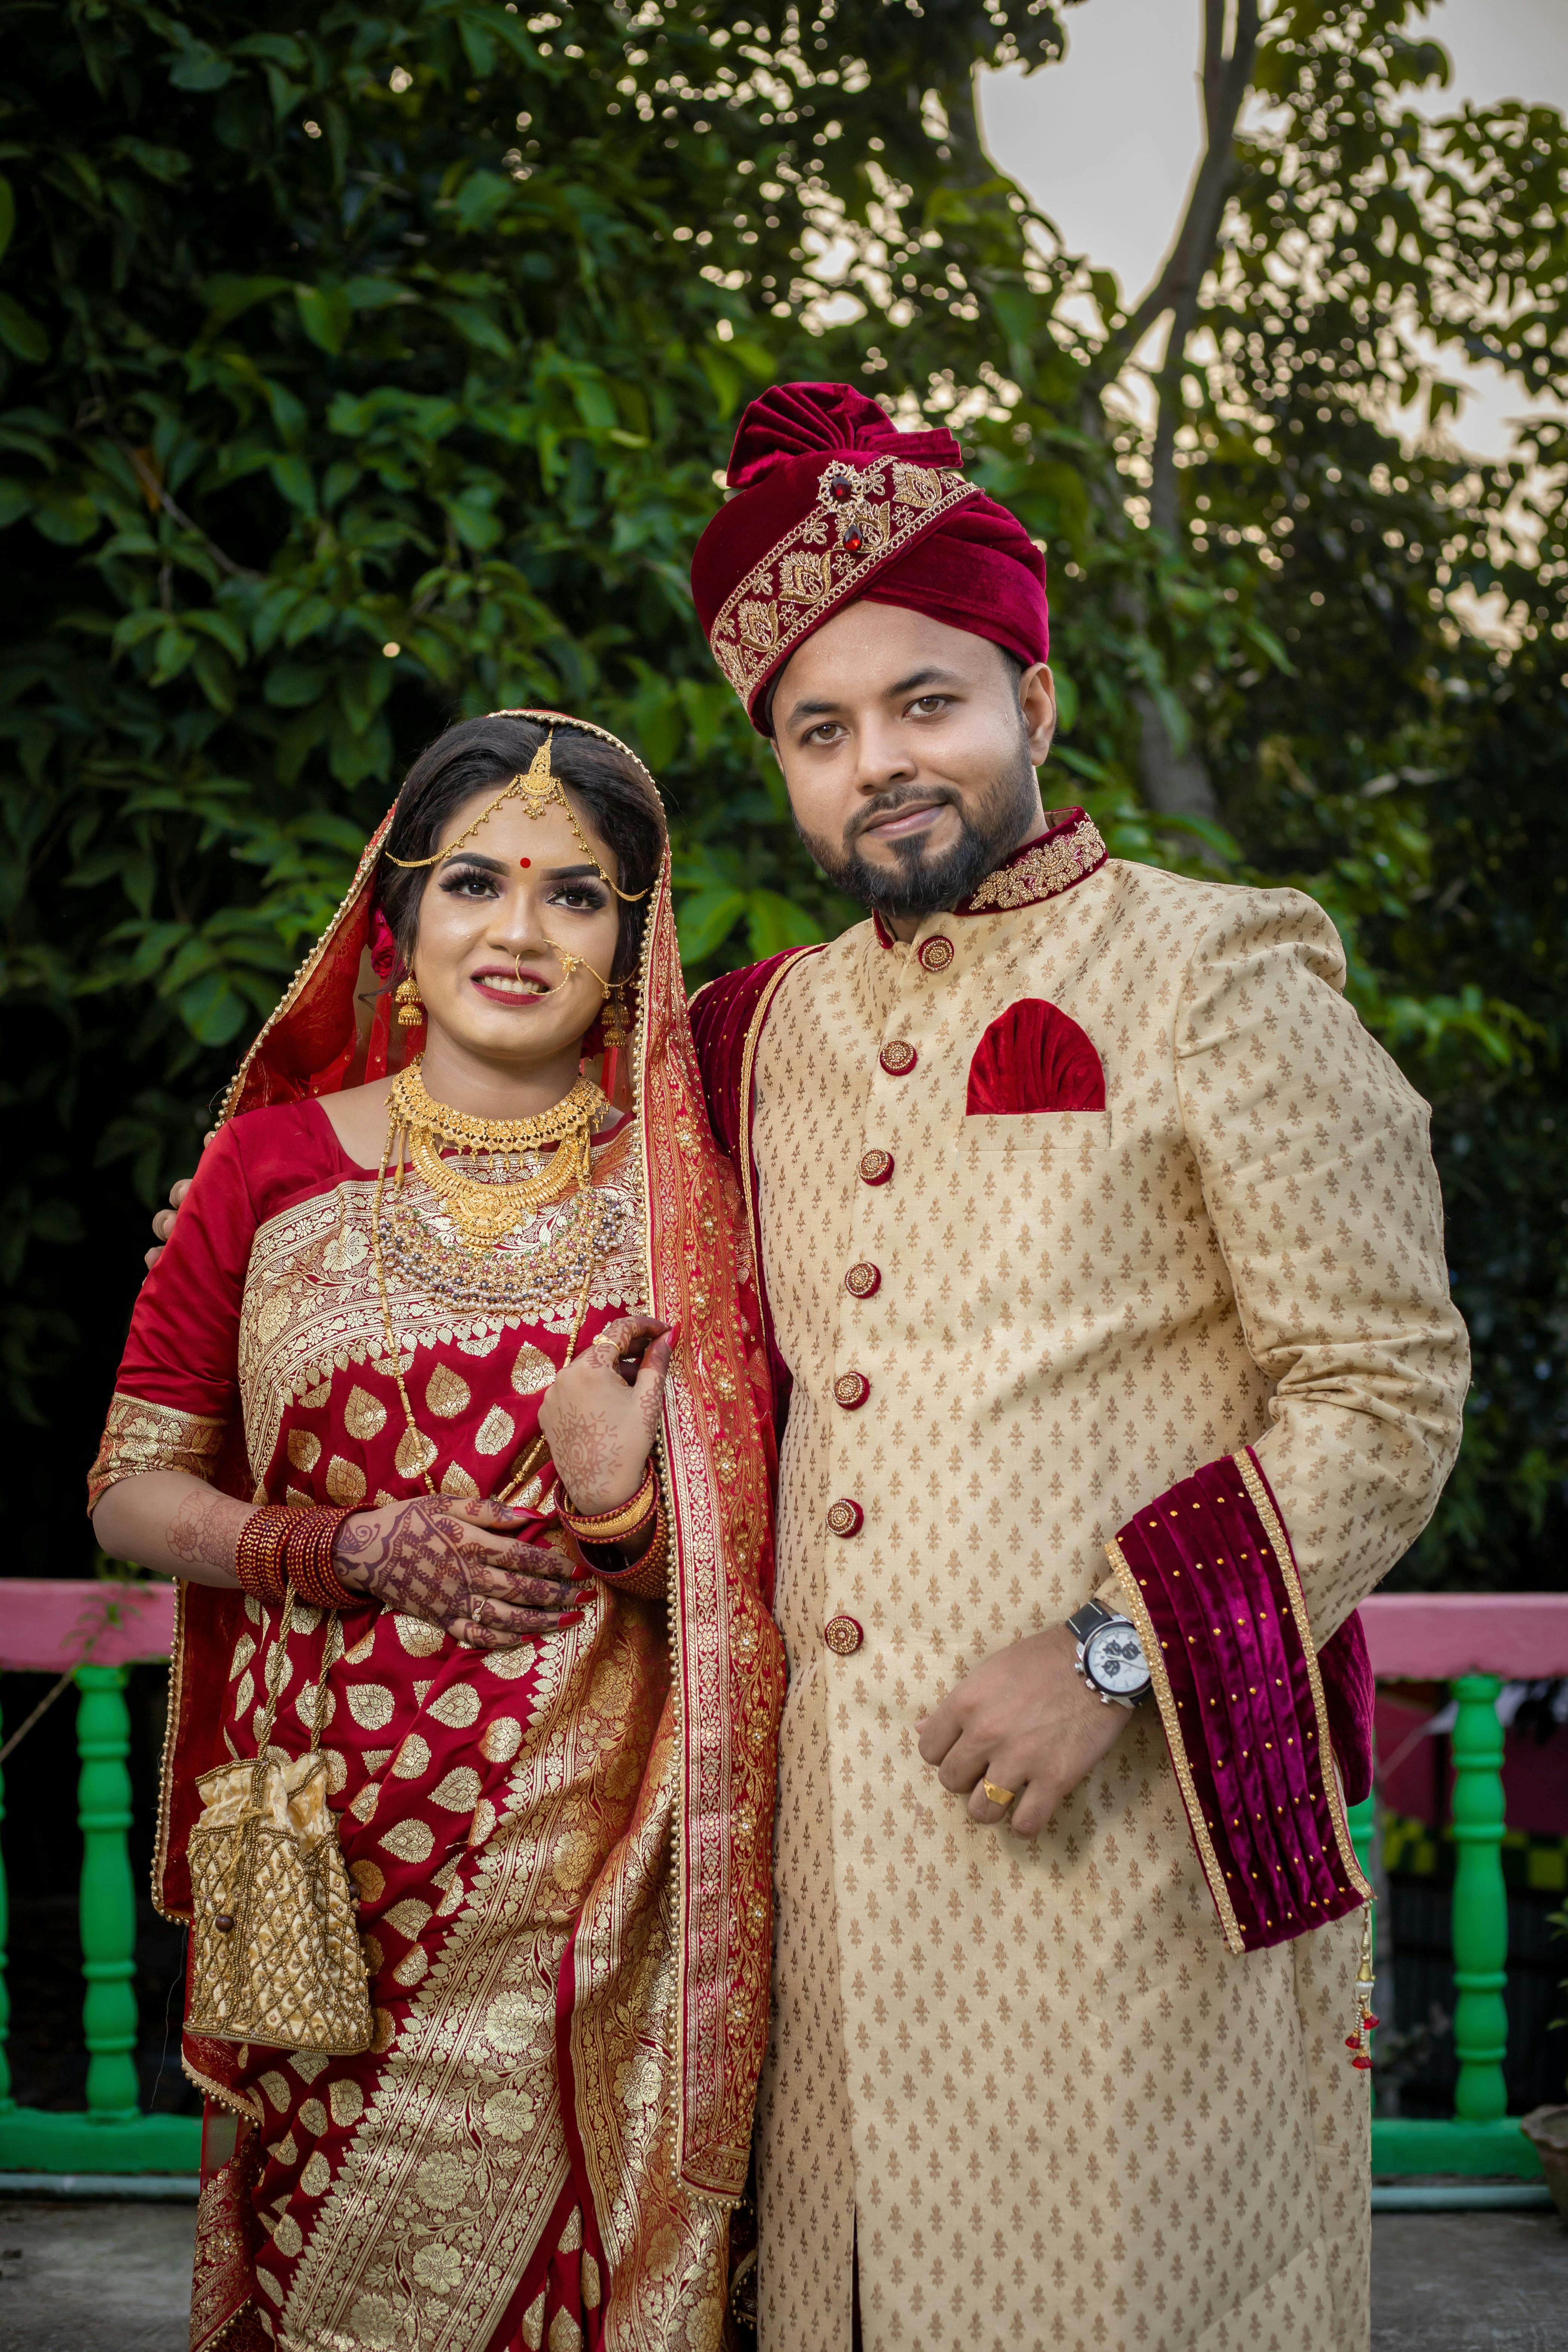 Mumbai Wedding With The Couple In Matching White Wedding Outfits | Wedding  outfit, Wedding outfit men, Groom dress men